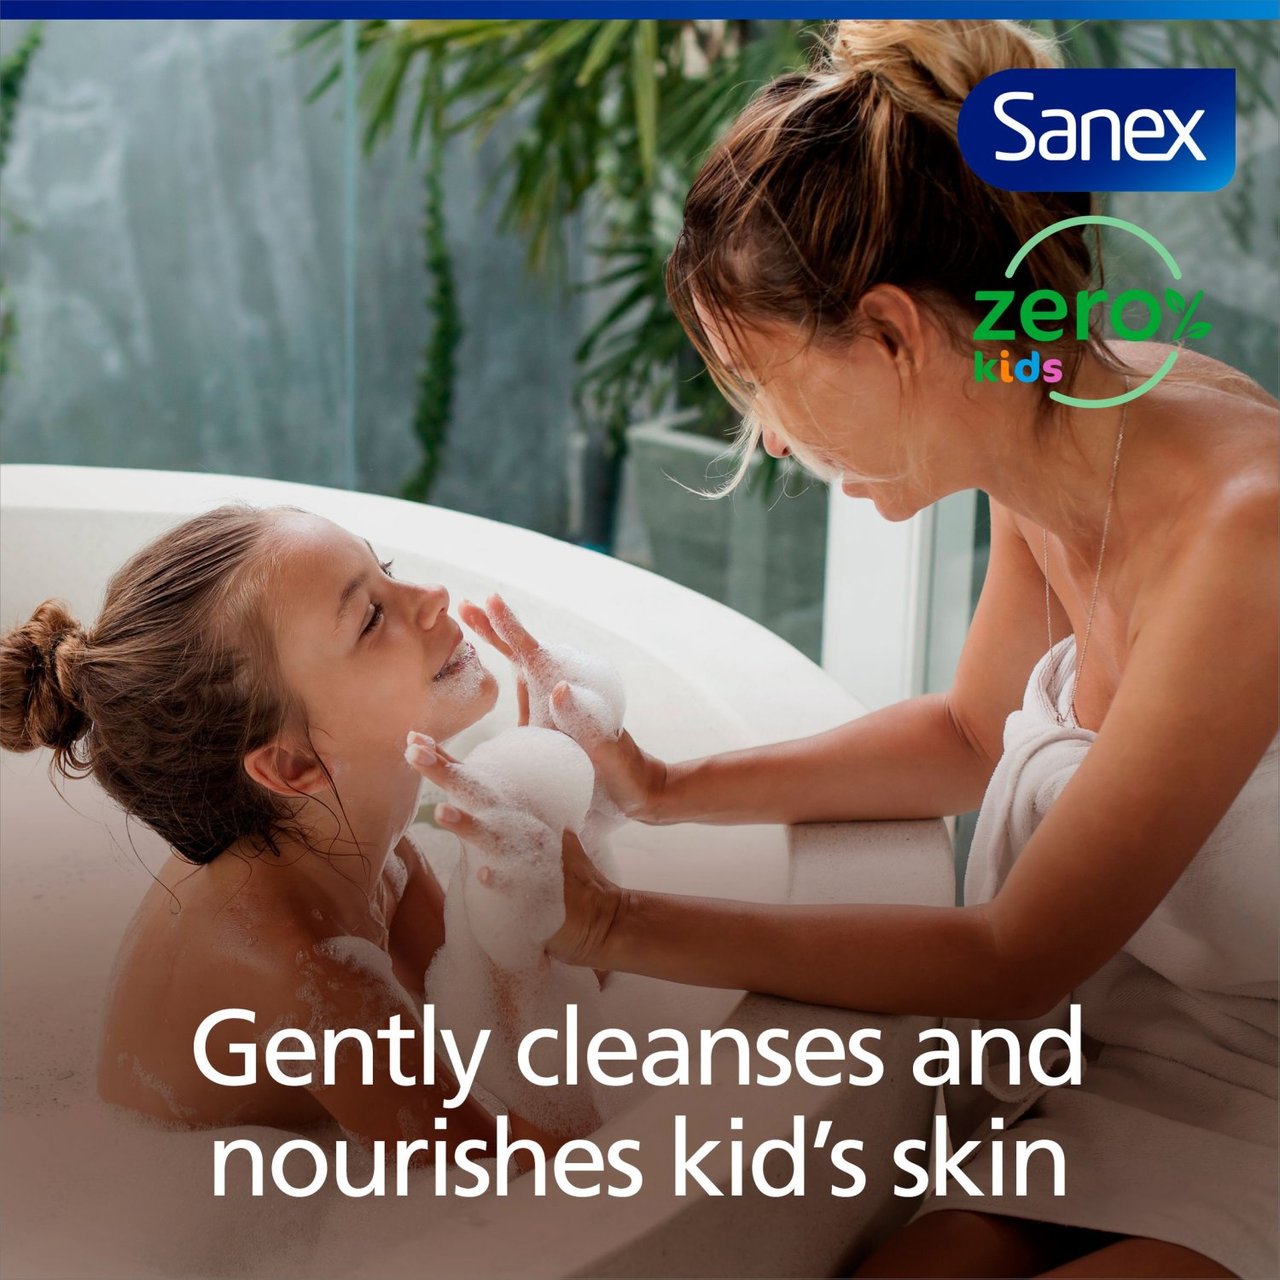 Sanex Zero % Kids Body Wash 450ml